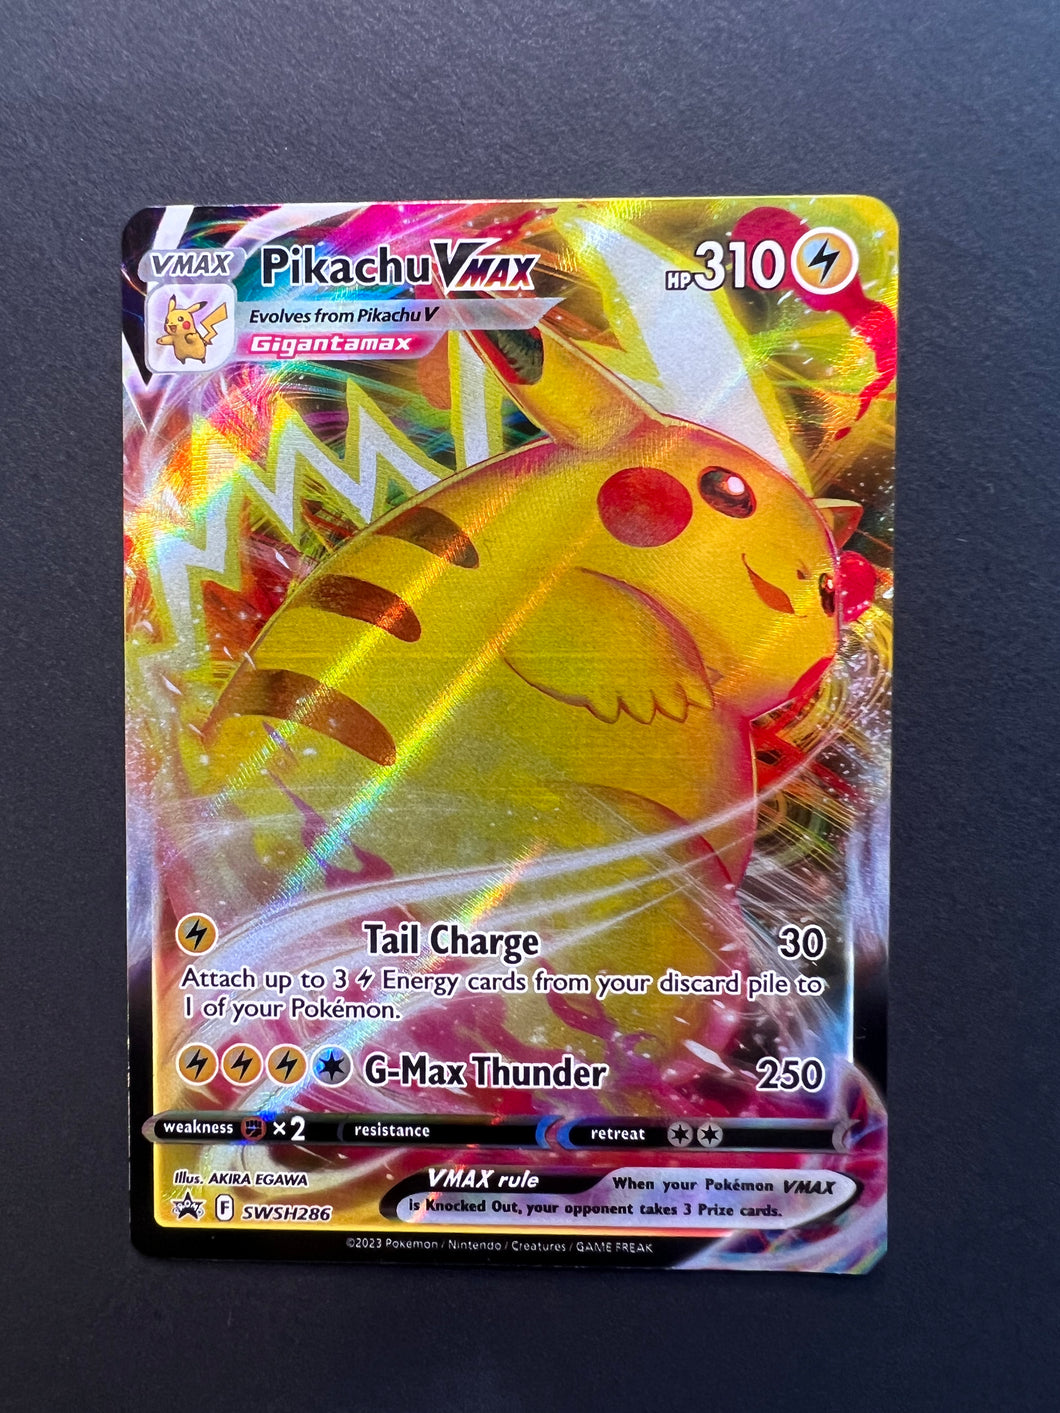 Pokemon **Jumbo** - Pikachu Vmax - SWSH286 - Oversize Card